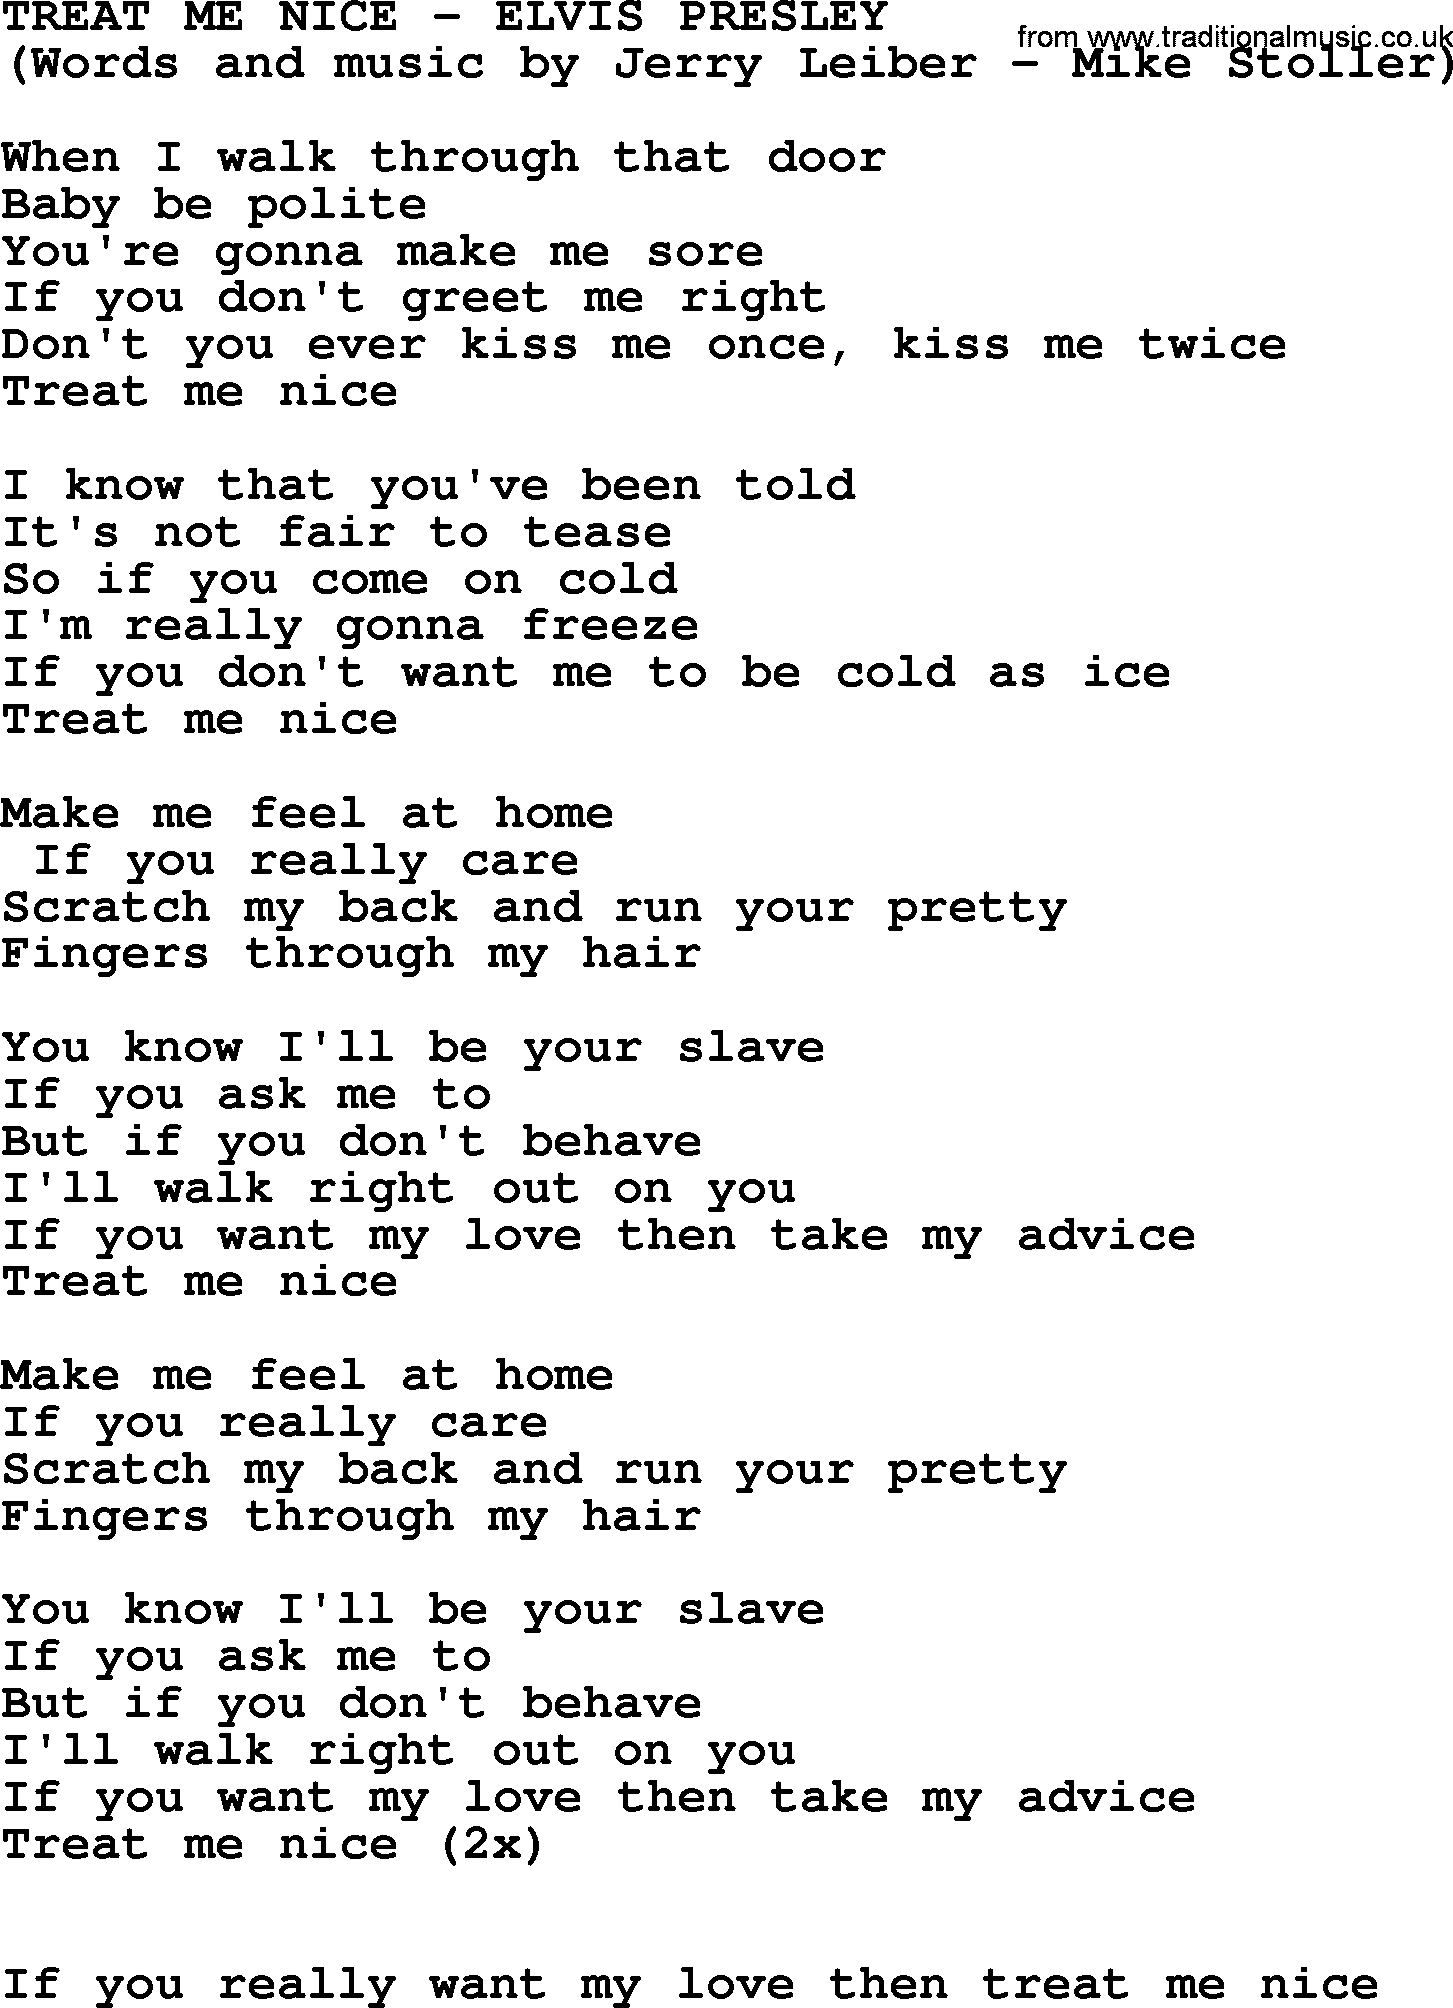 Elvis Presley song: Treat Me Nice lyrics